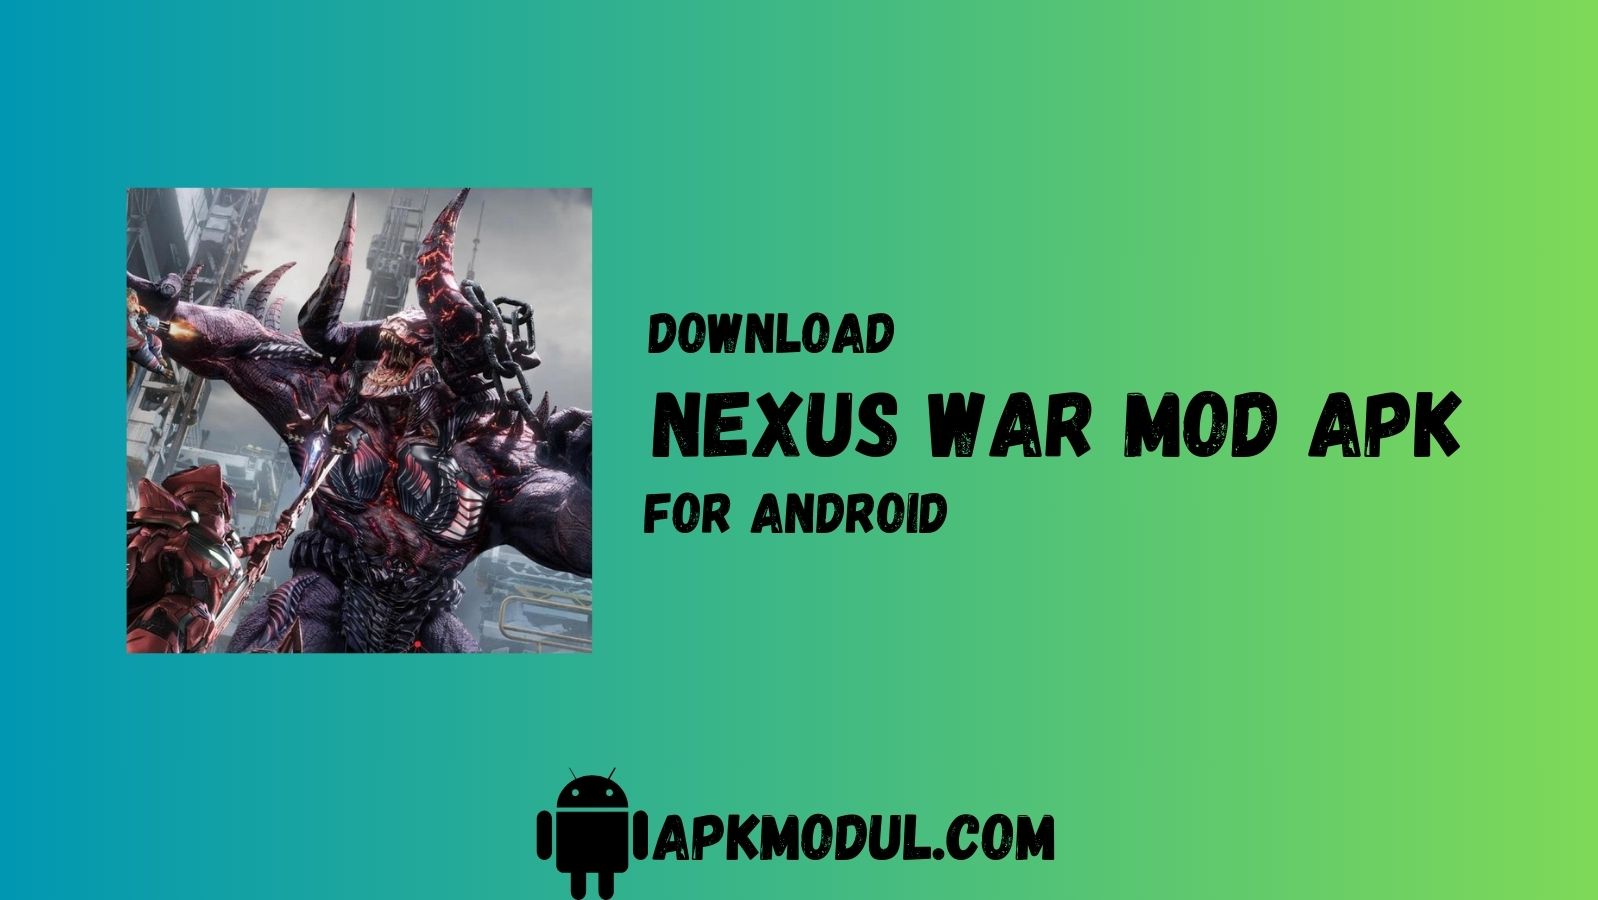 Nexus War mod apk